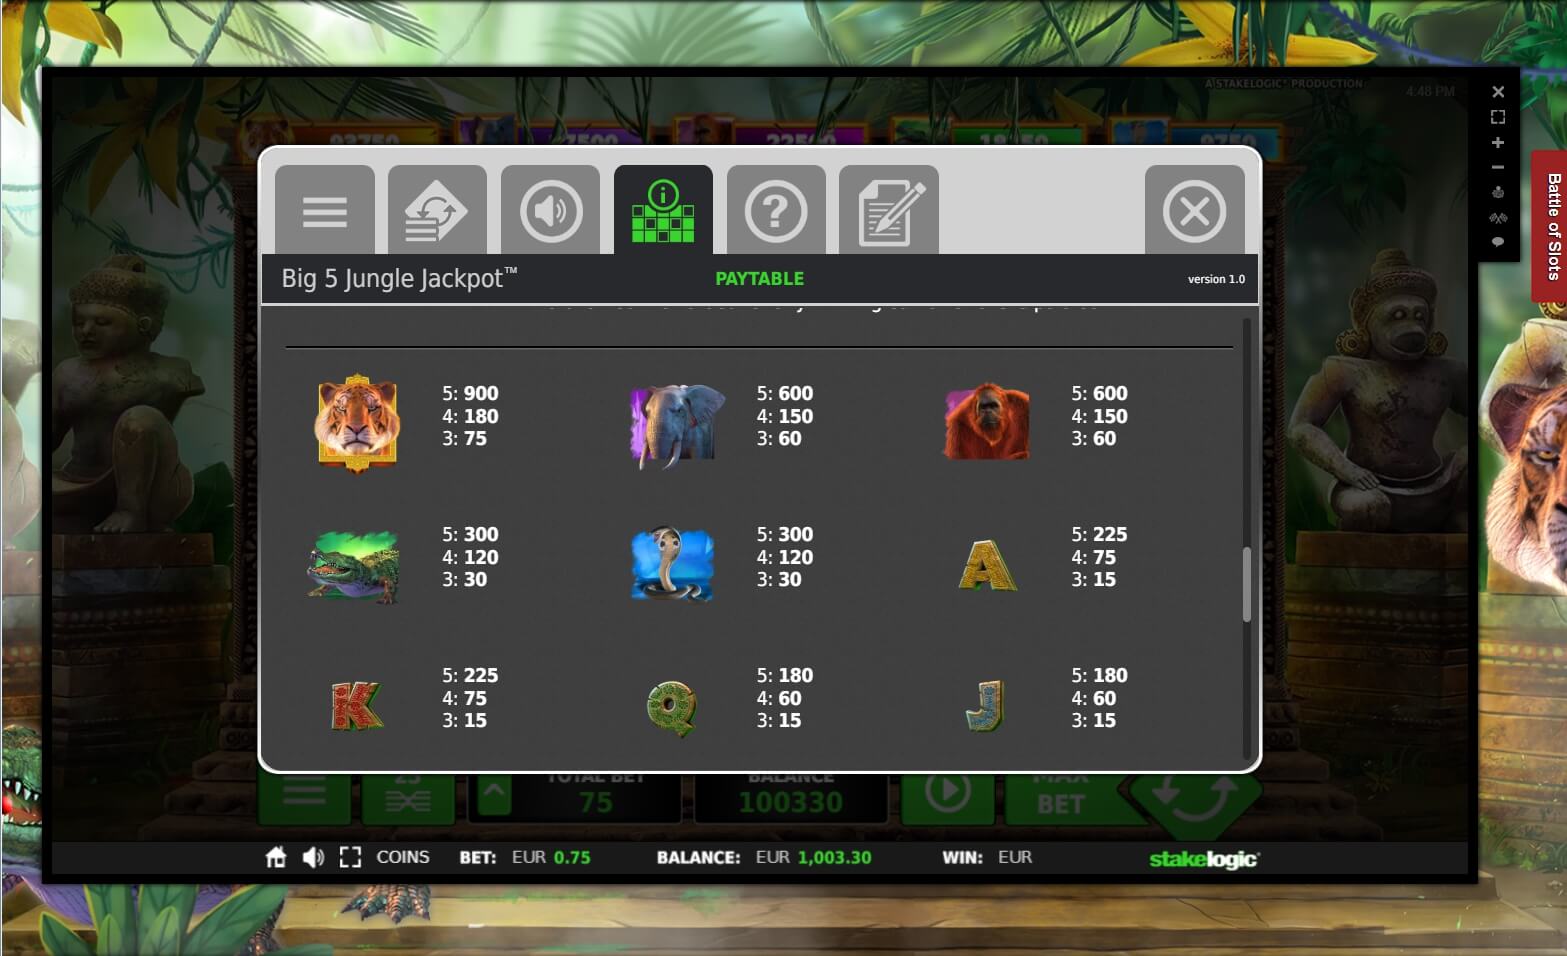 big 5 jungle jackpot slot machine detail image 2